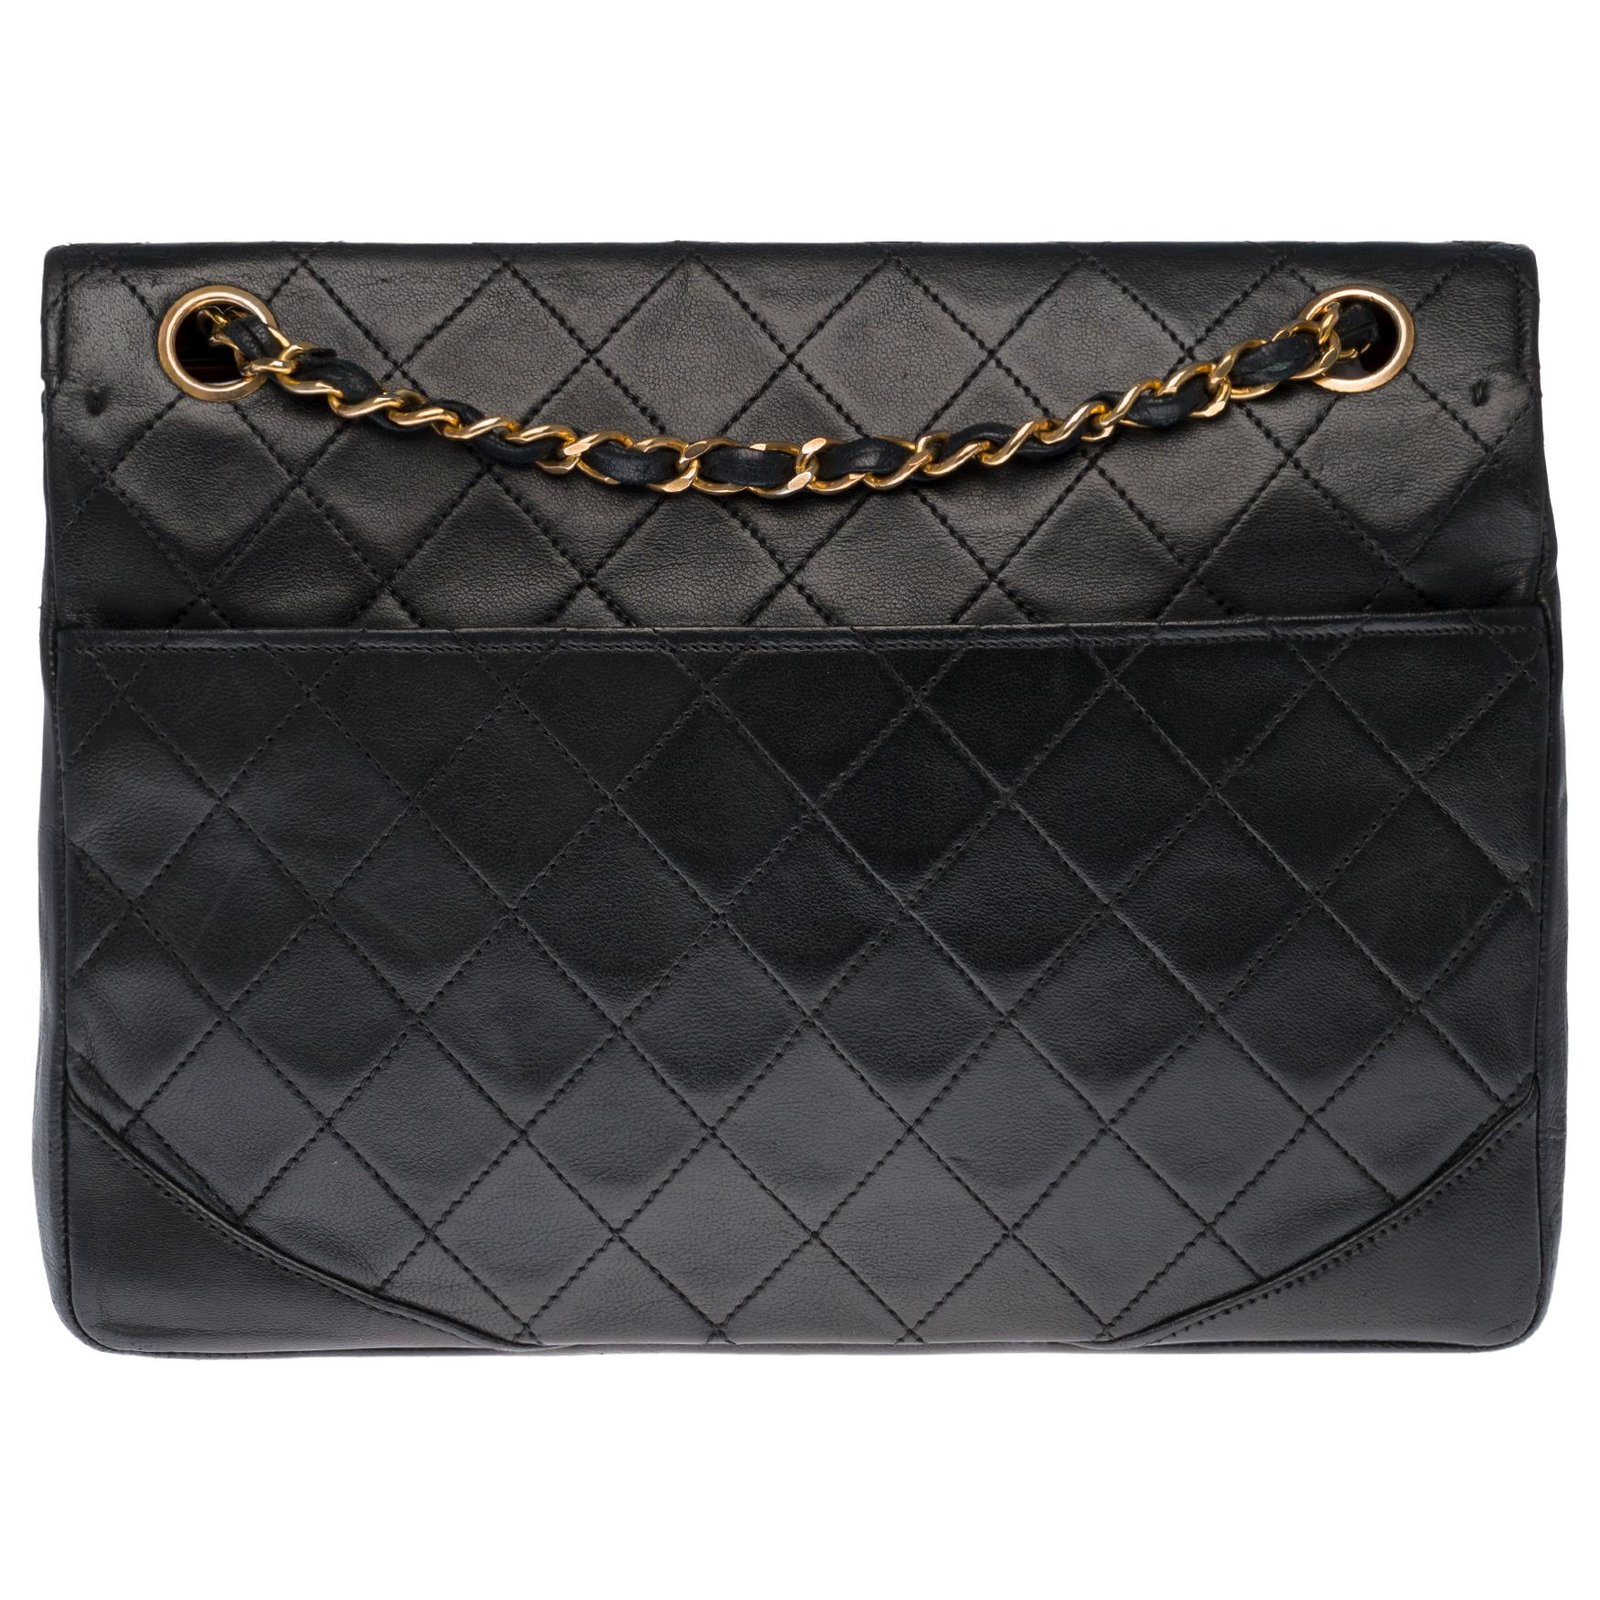 Timeless Chanel Classique handbag in black quilted lambskin, garniture ...